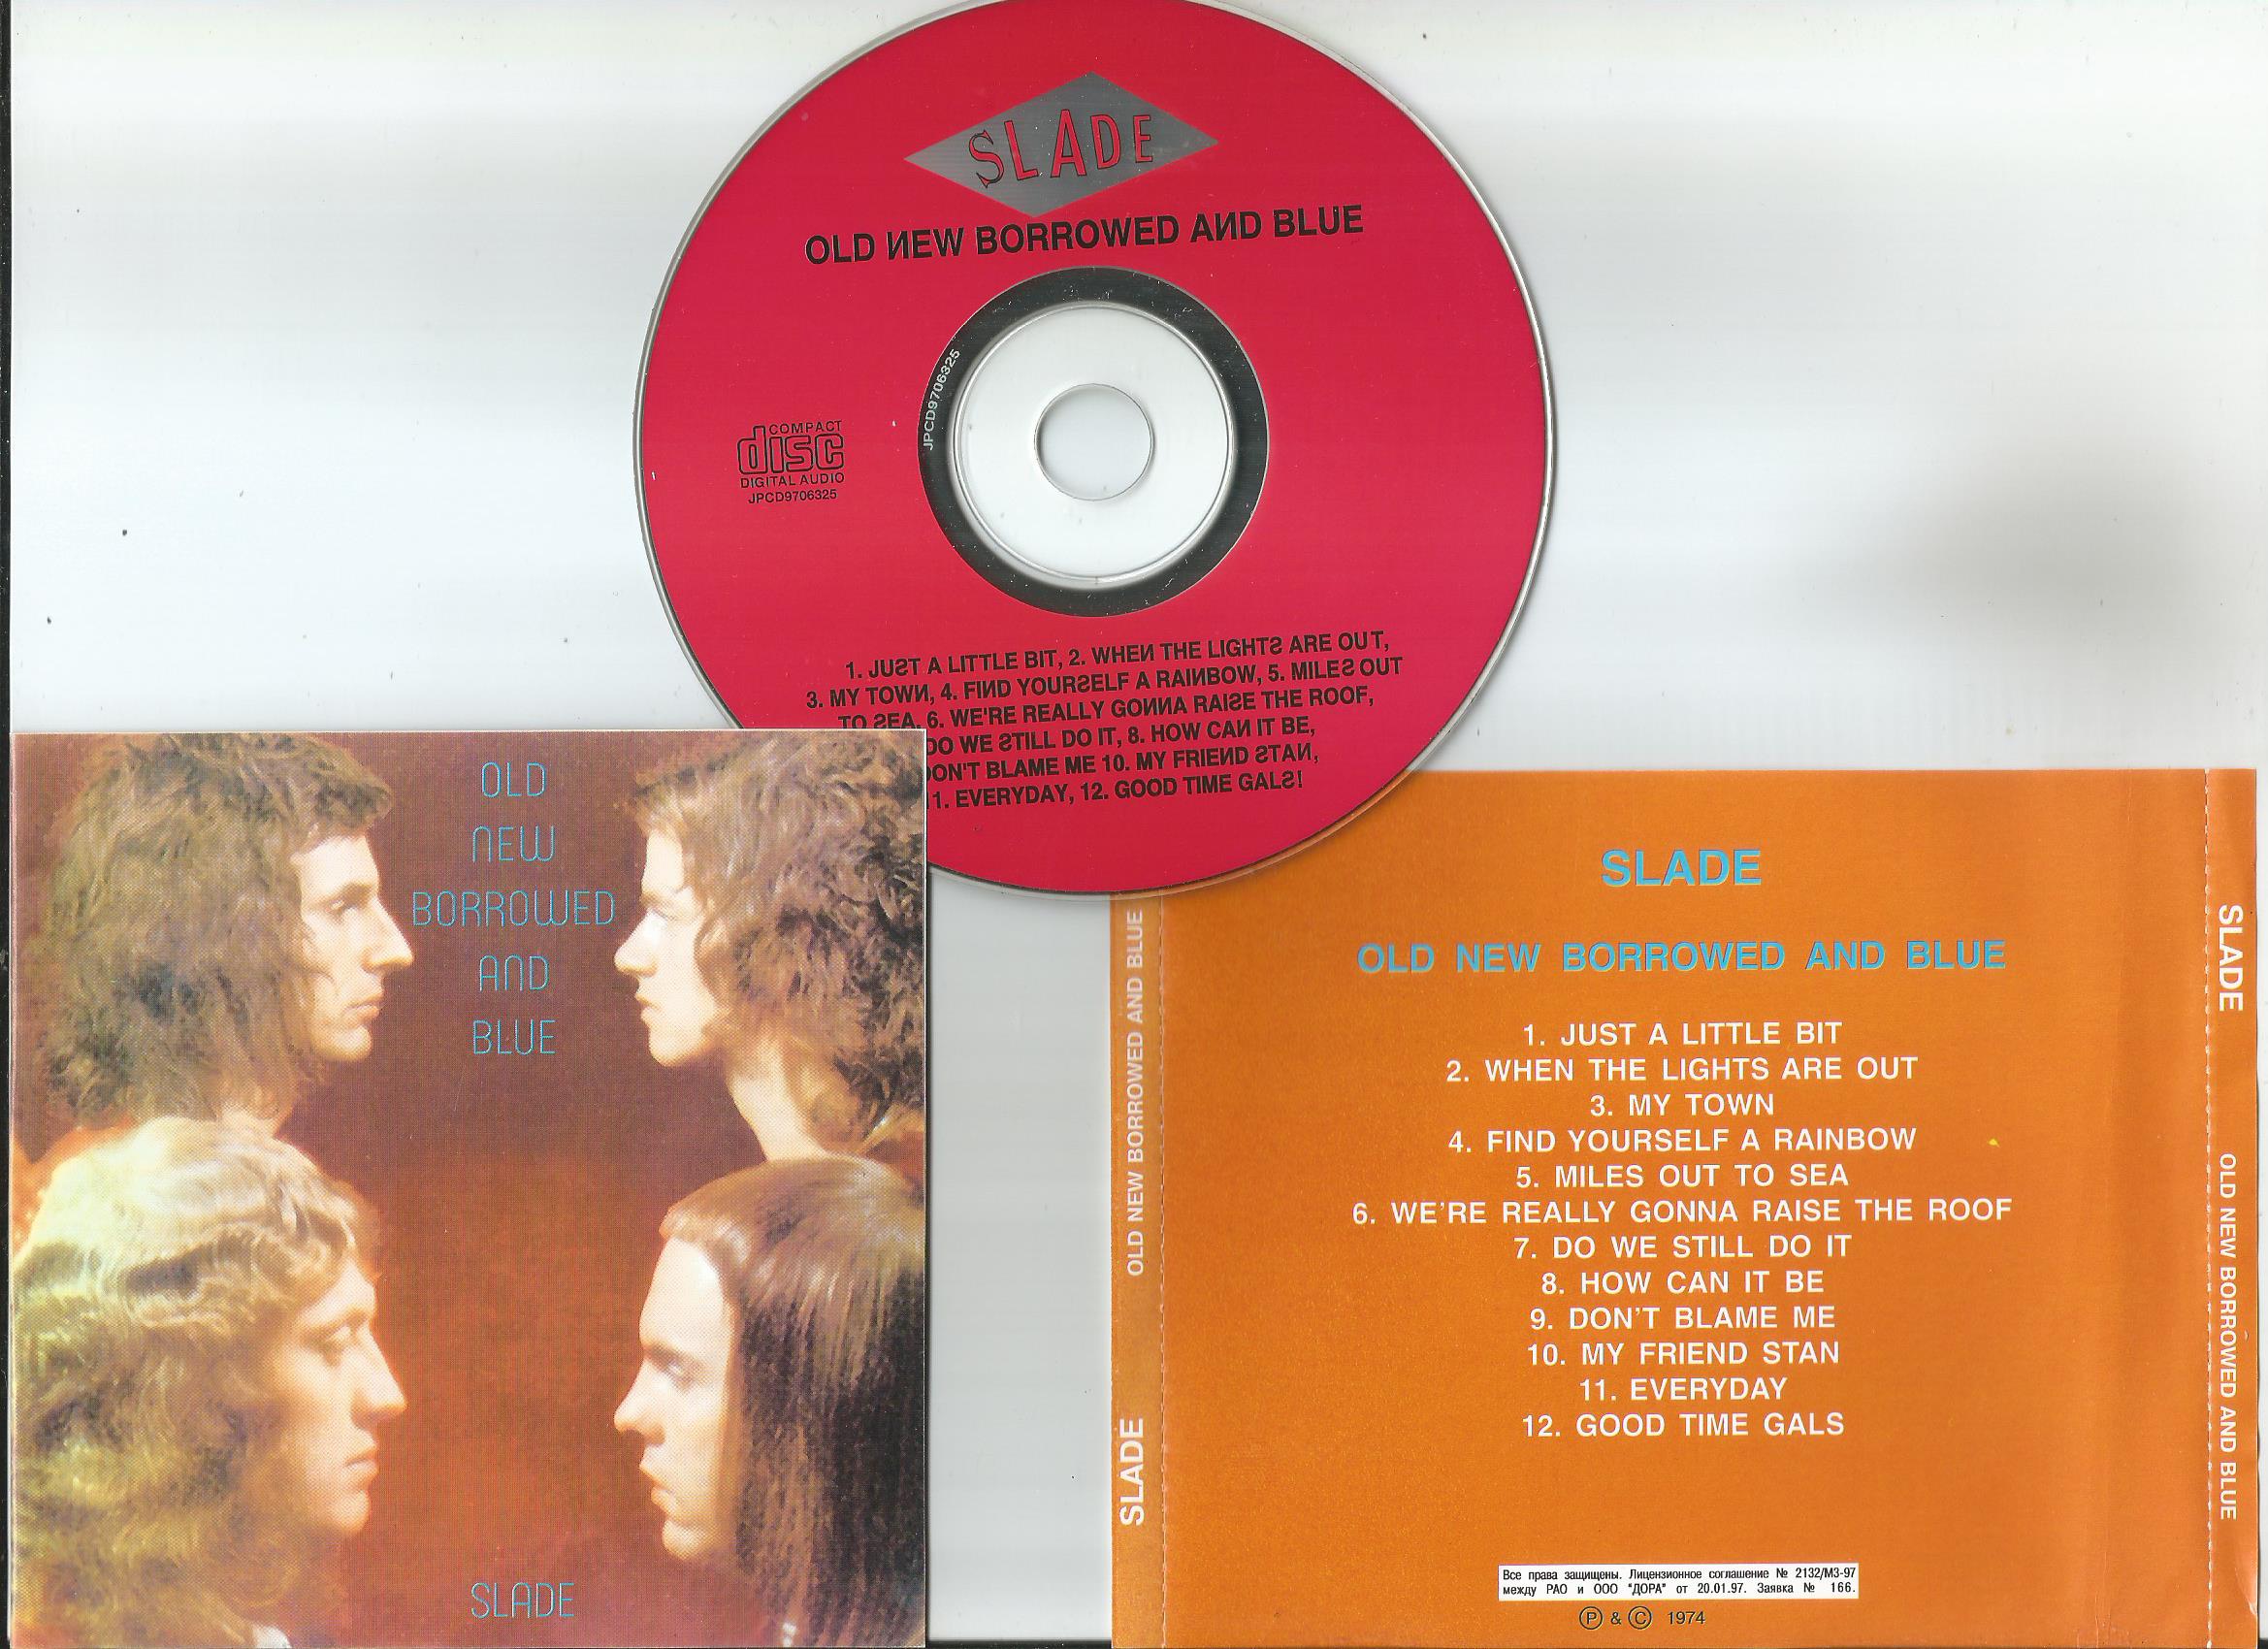 Old new borrowed. Slade old New Borrowed and Blue 1974. Slade old New Borrowed and Blue LP. Slade old New Borrowed and Blue обложка. Slade альбом Borrowed.